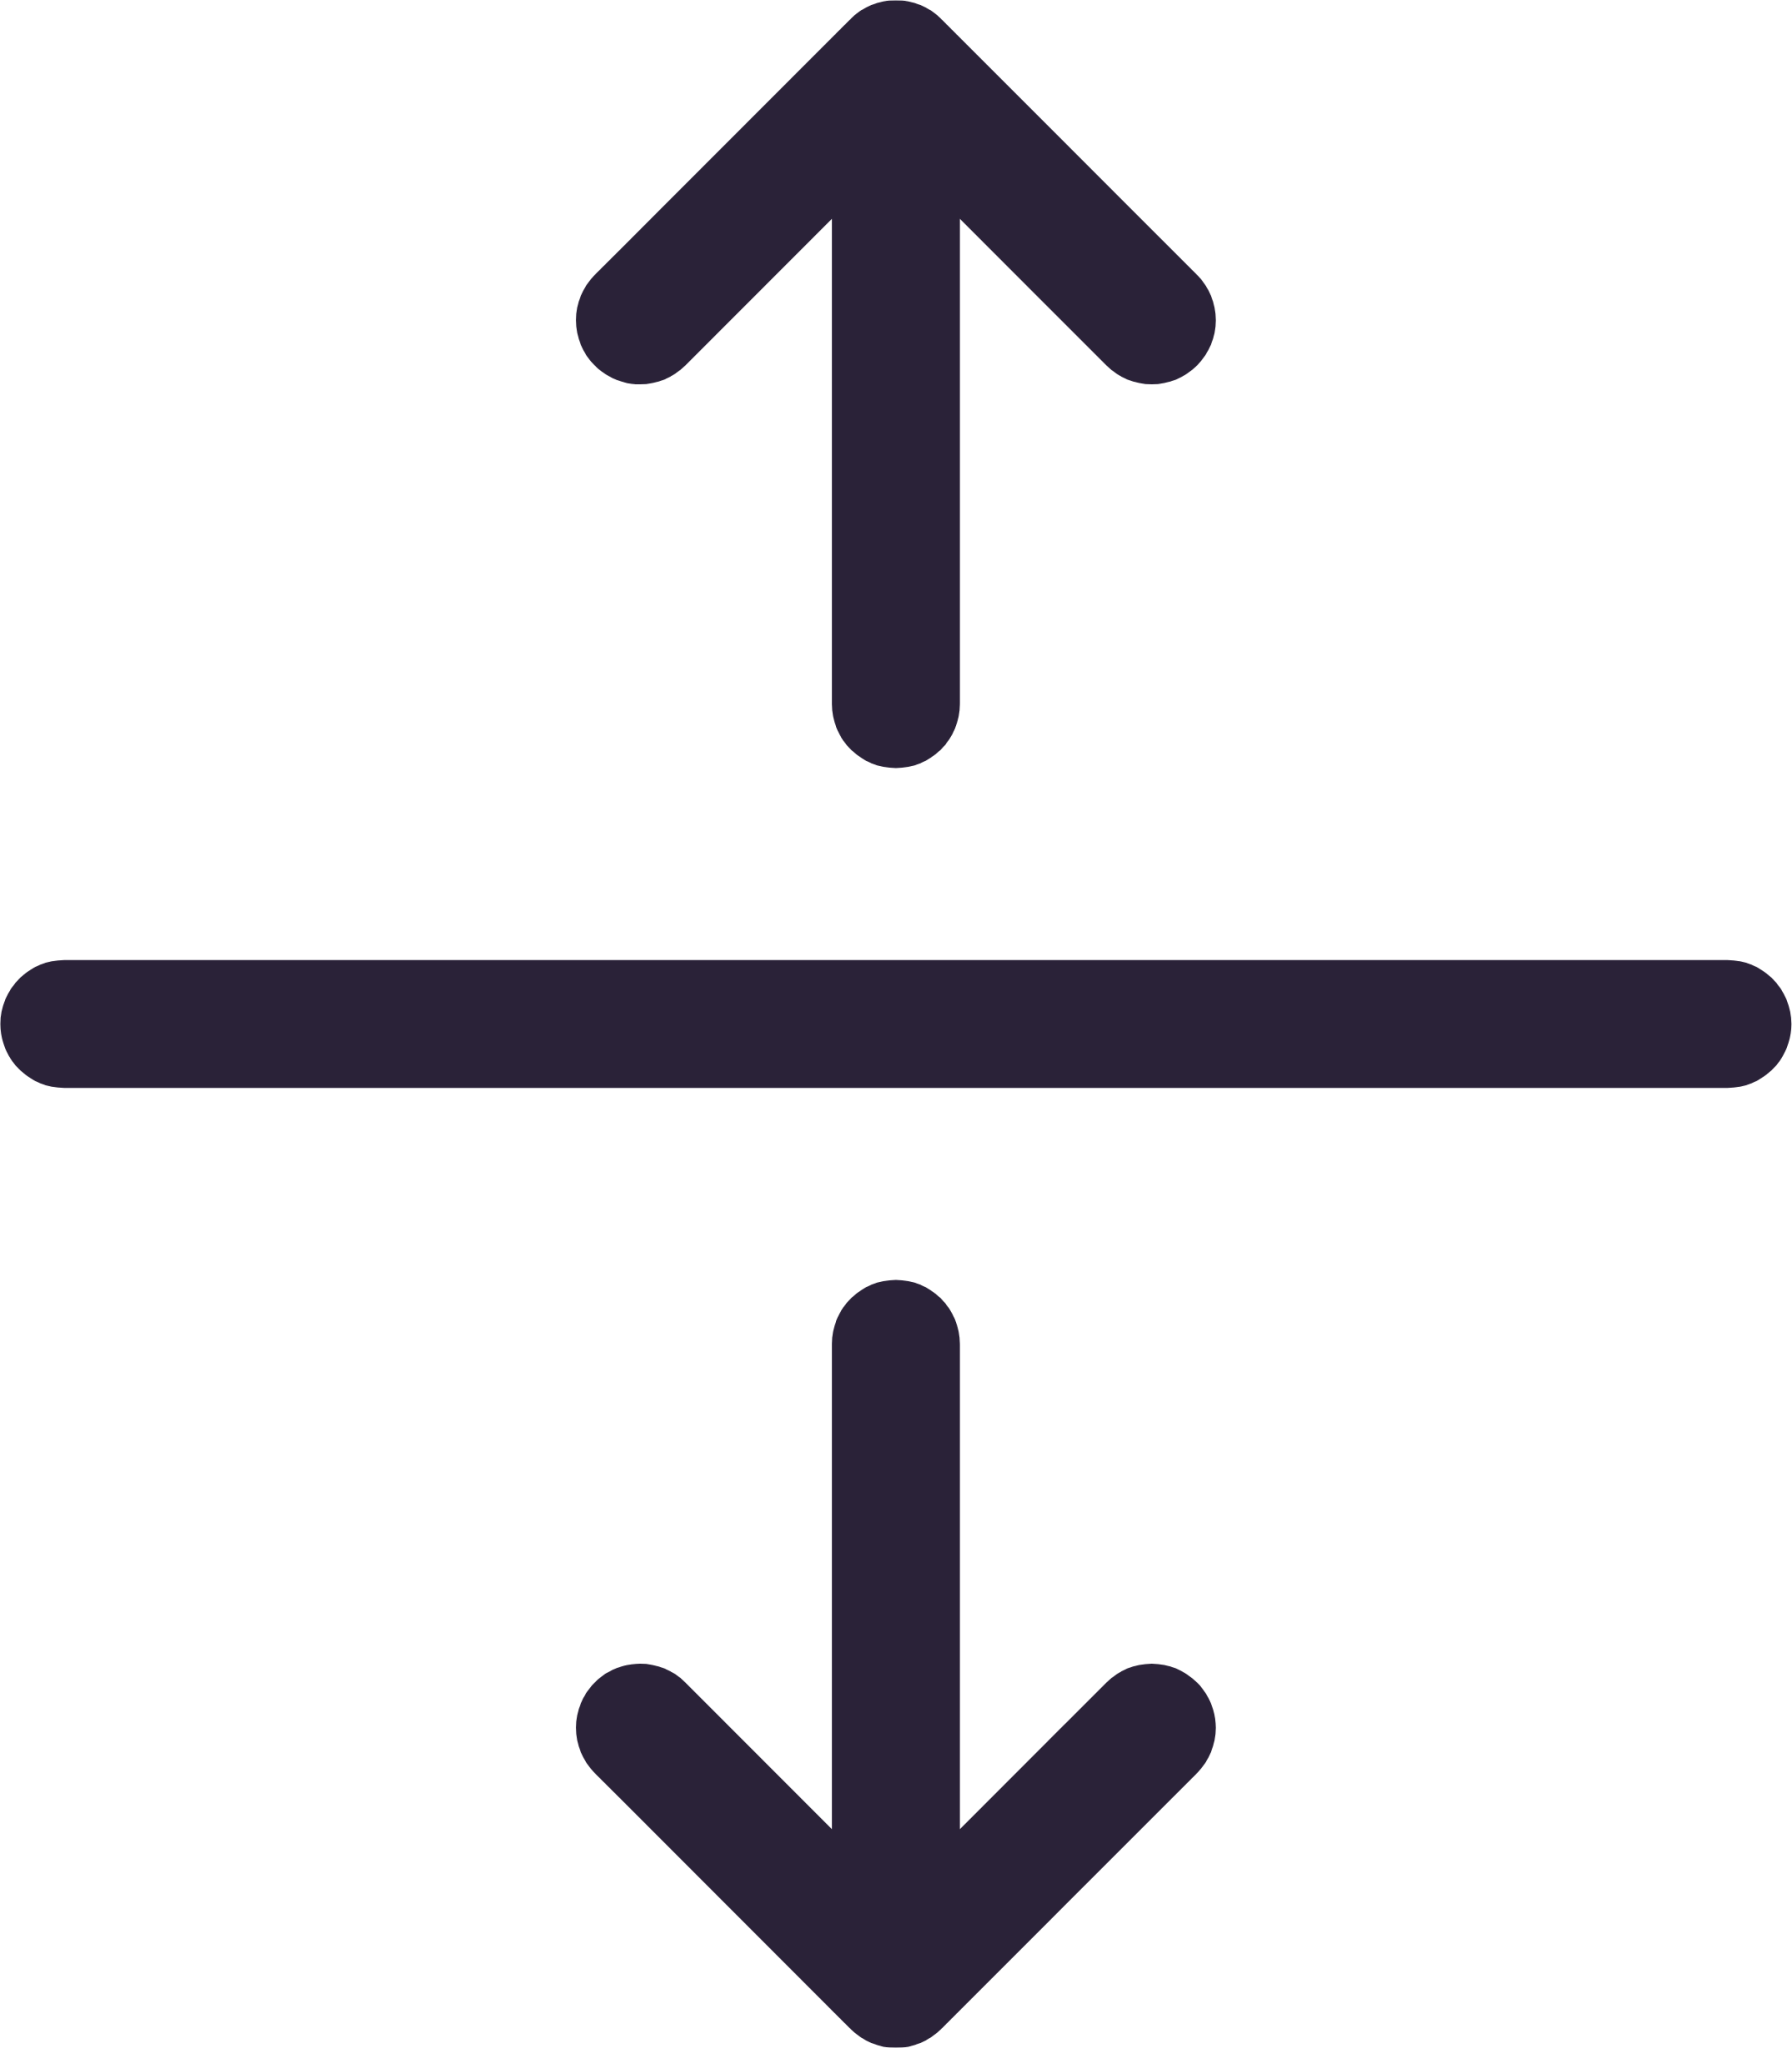 arrow expand icon